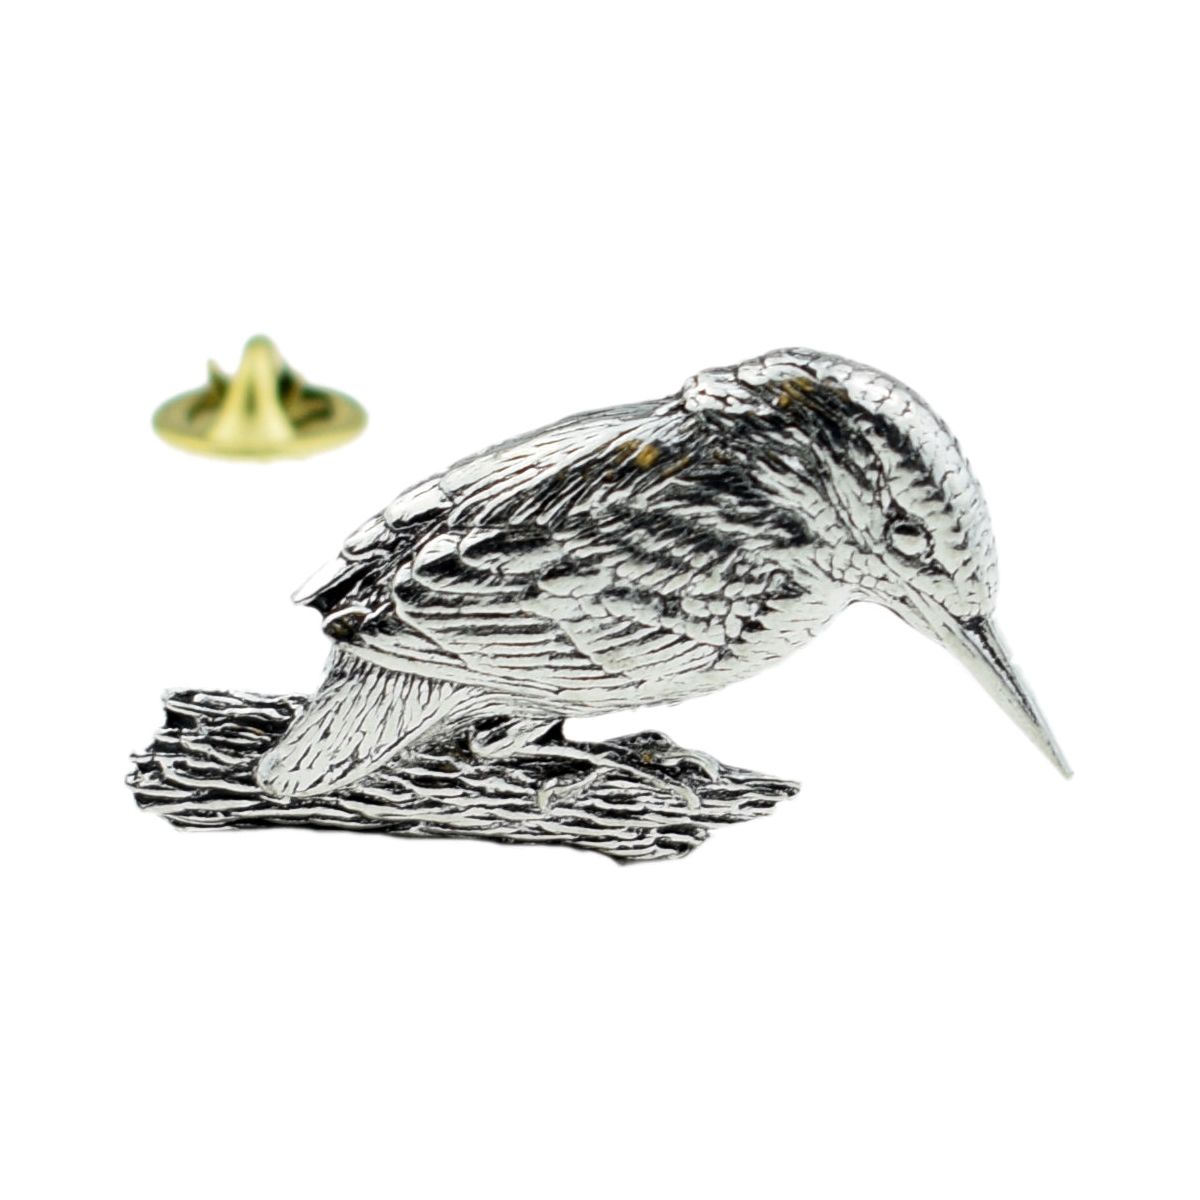 Kingfisher Bird English Pewter Lapel Pin Badge - Ashton and Finch